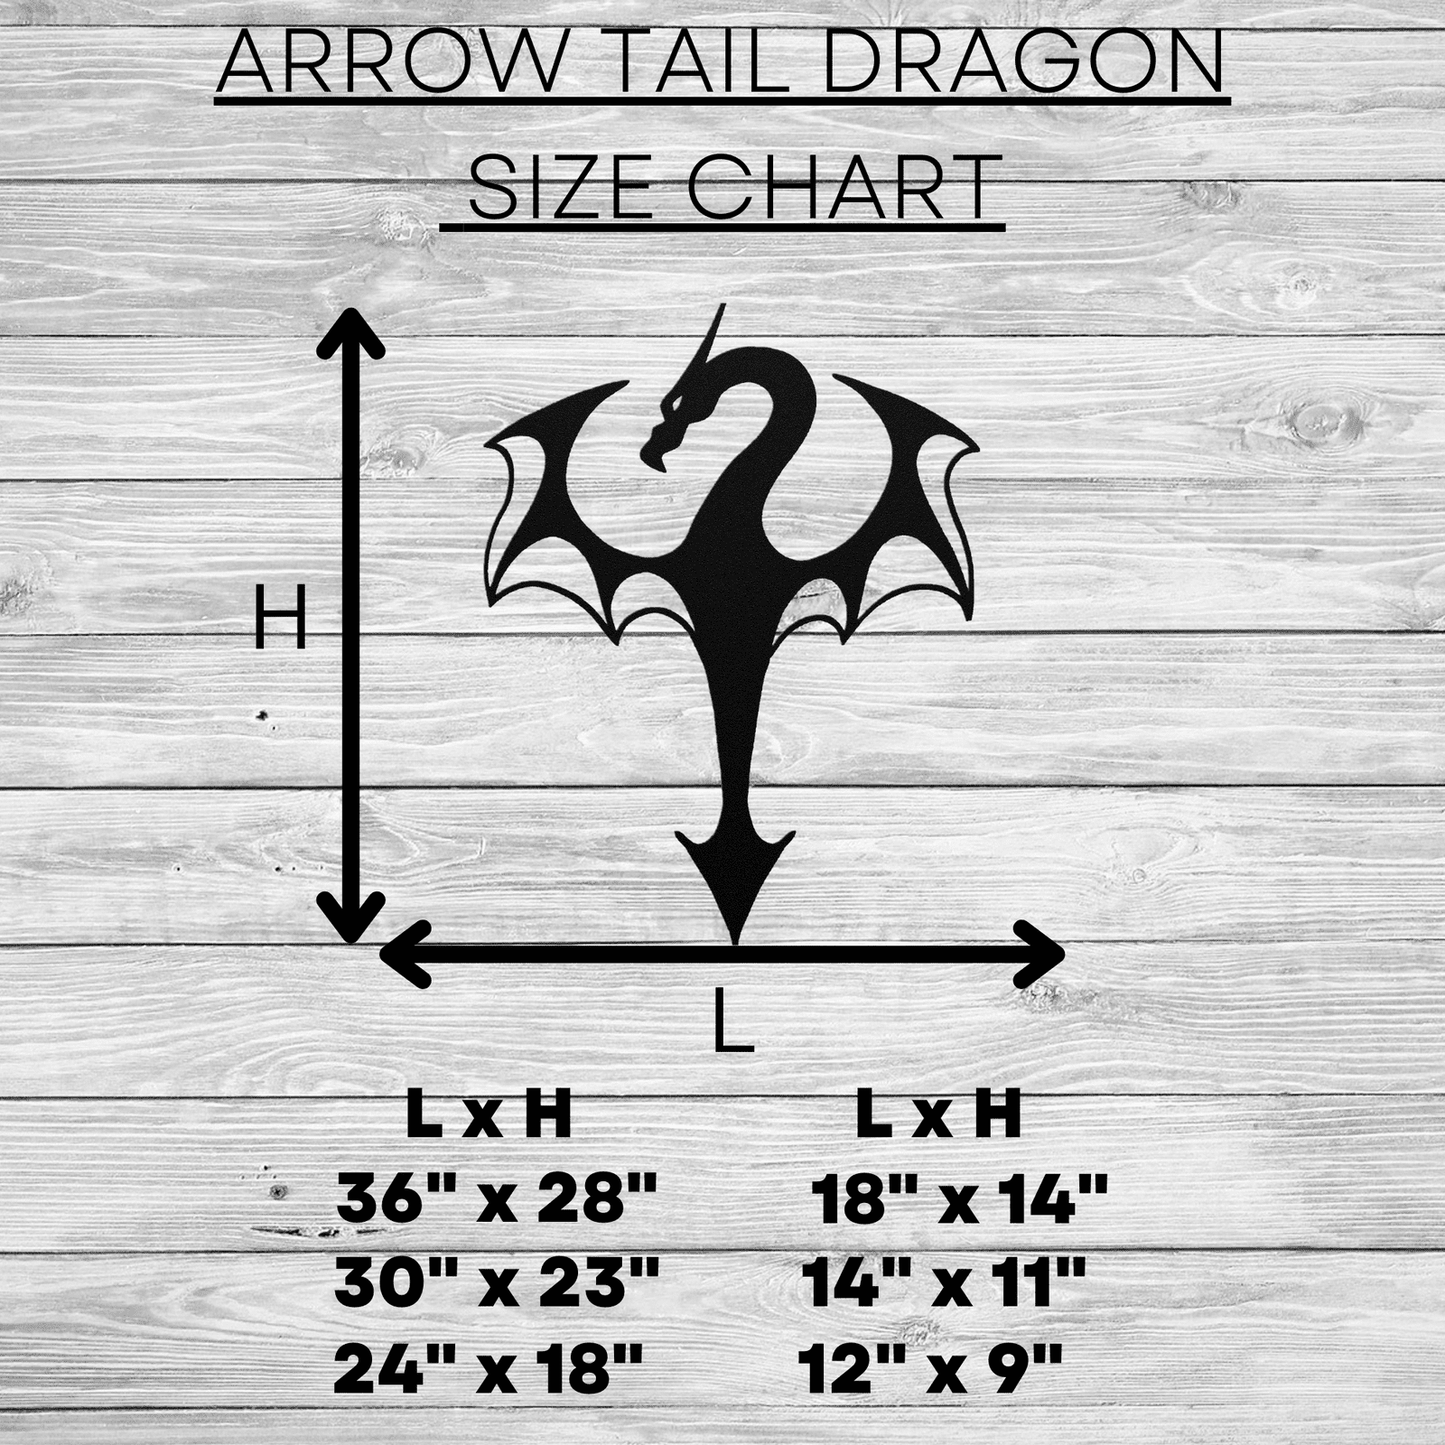 Mystical Arrow Tail Dragon Metal Wall Art